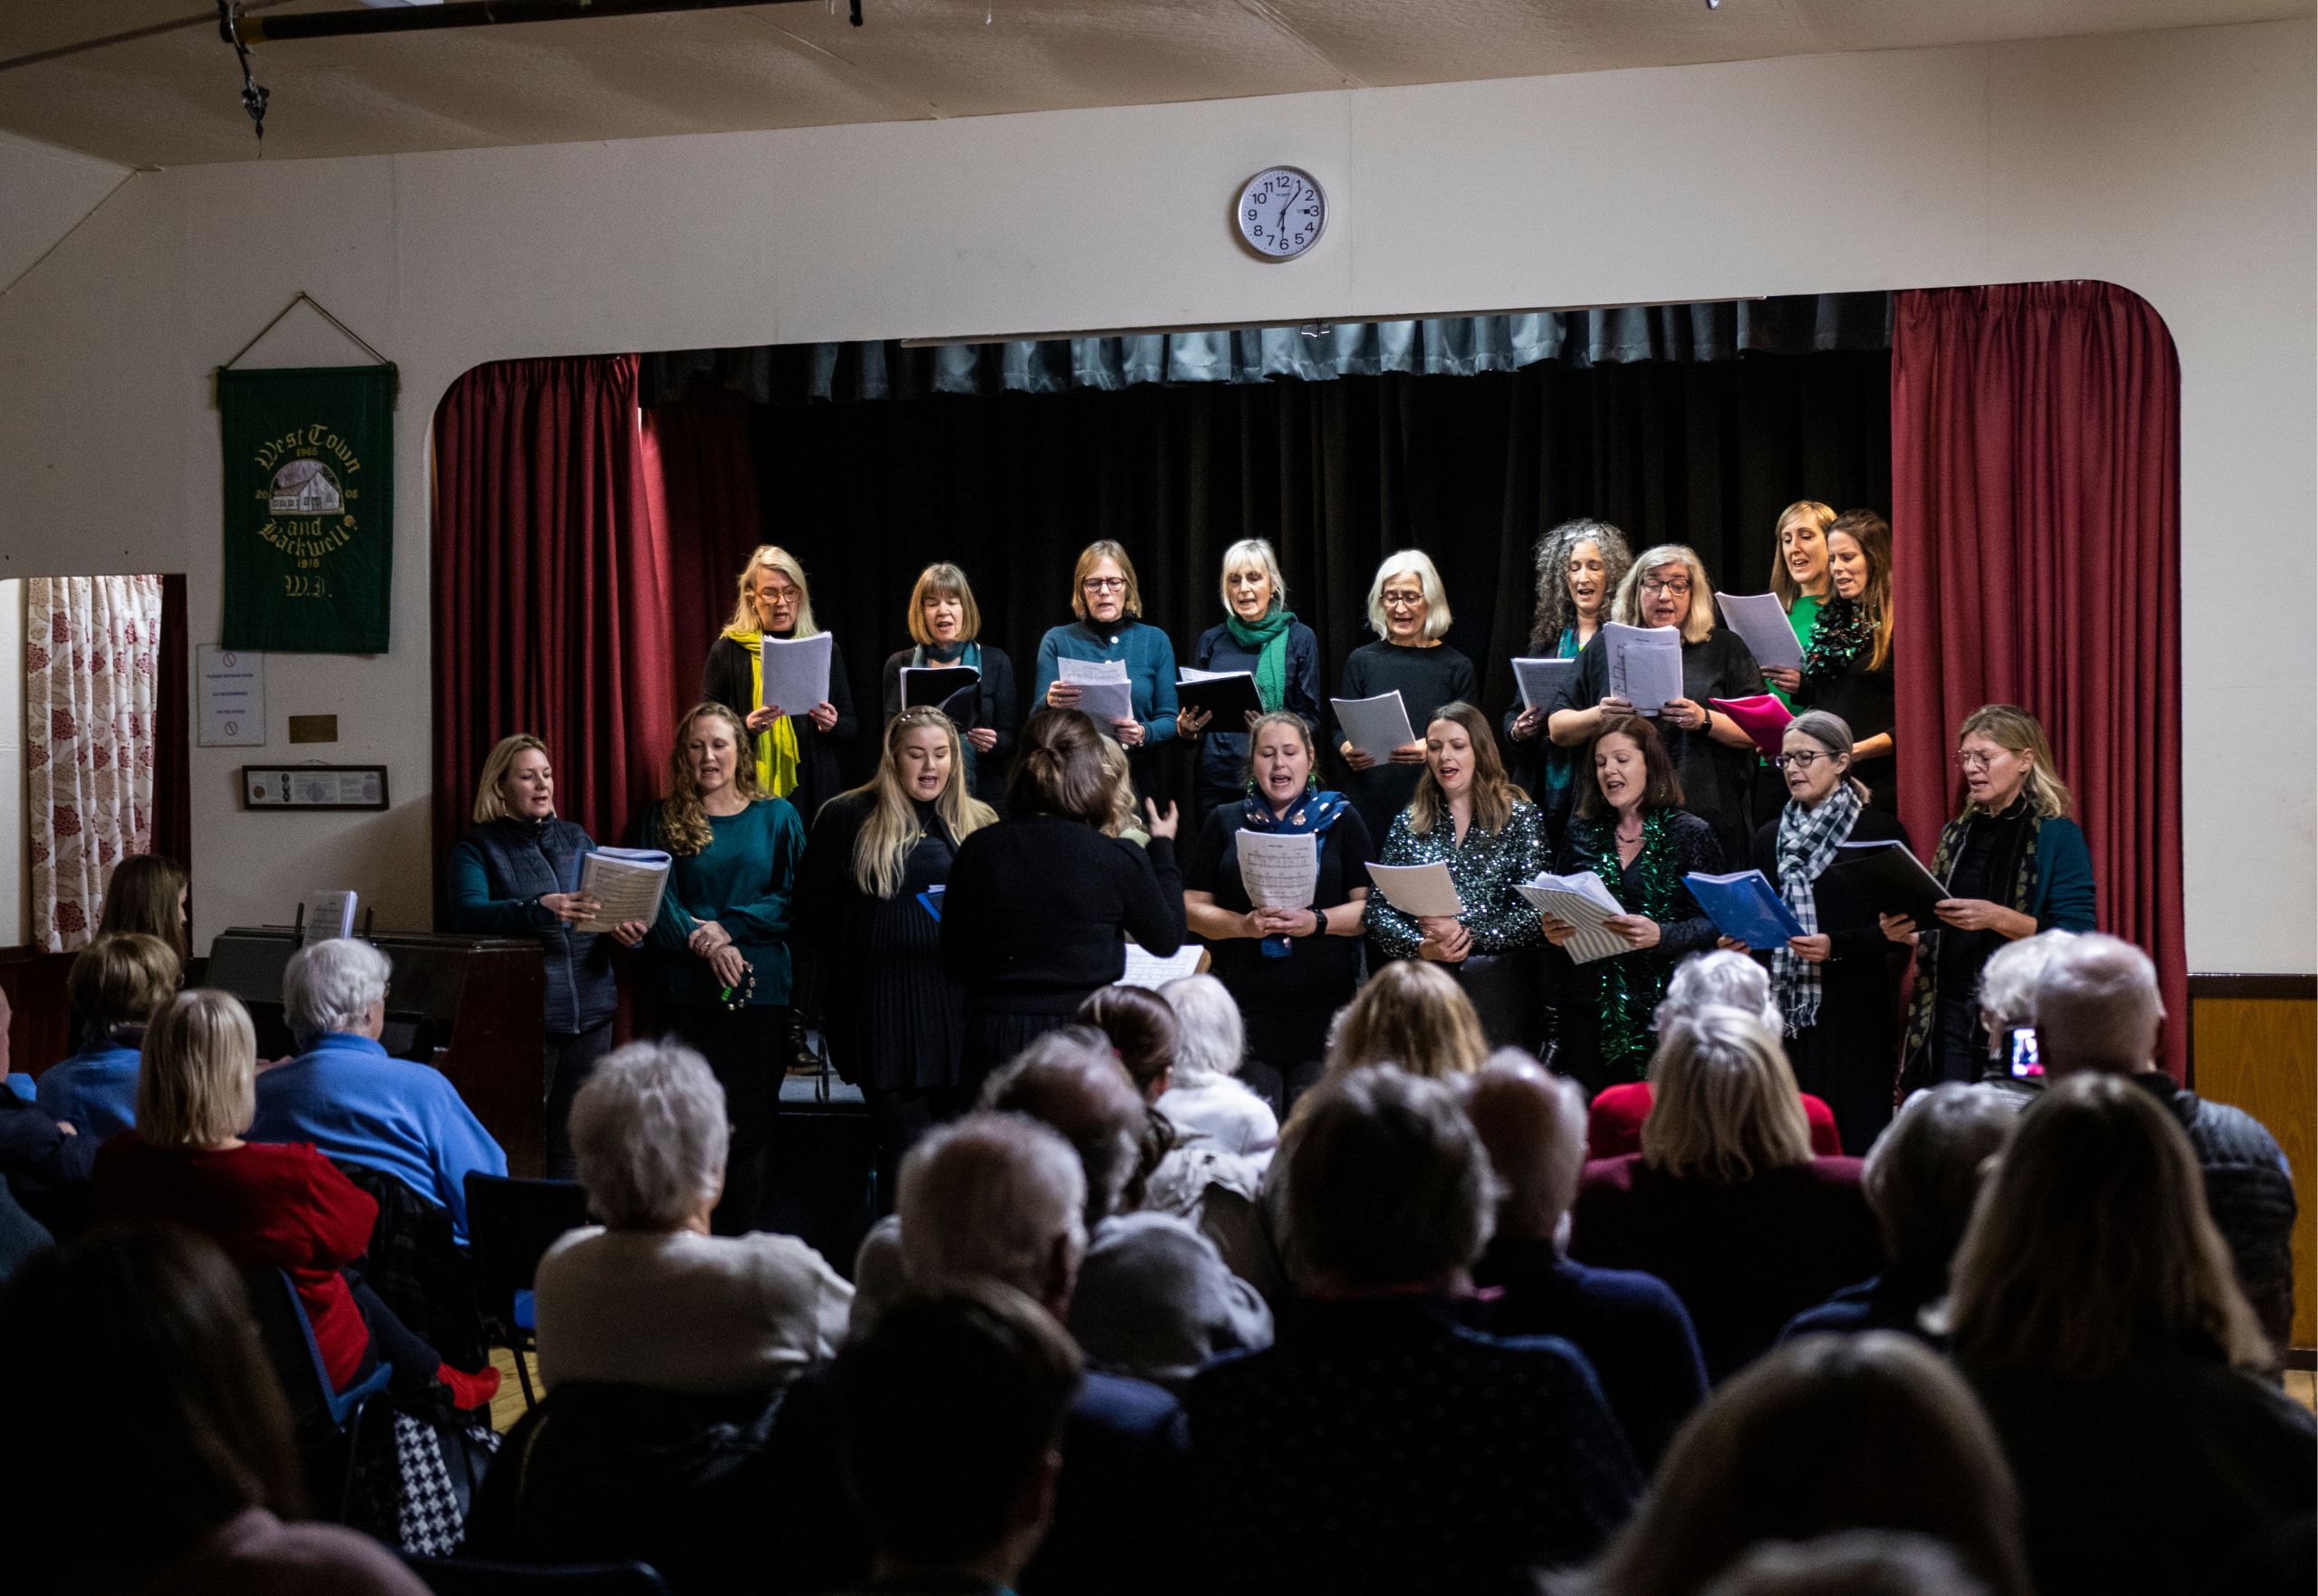 A choir singing at the 2022 BRACE Christmas Concert.